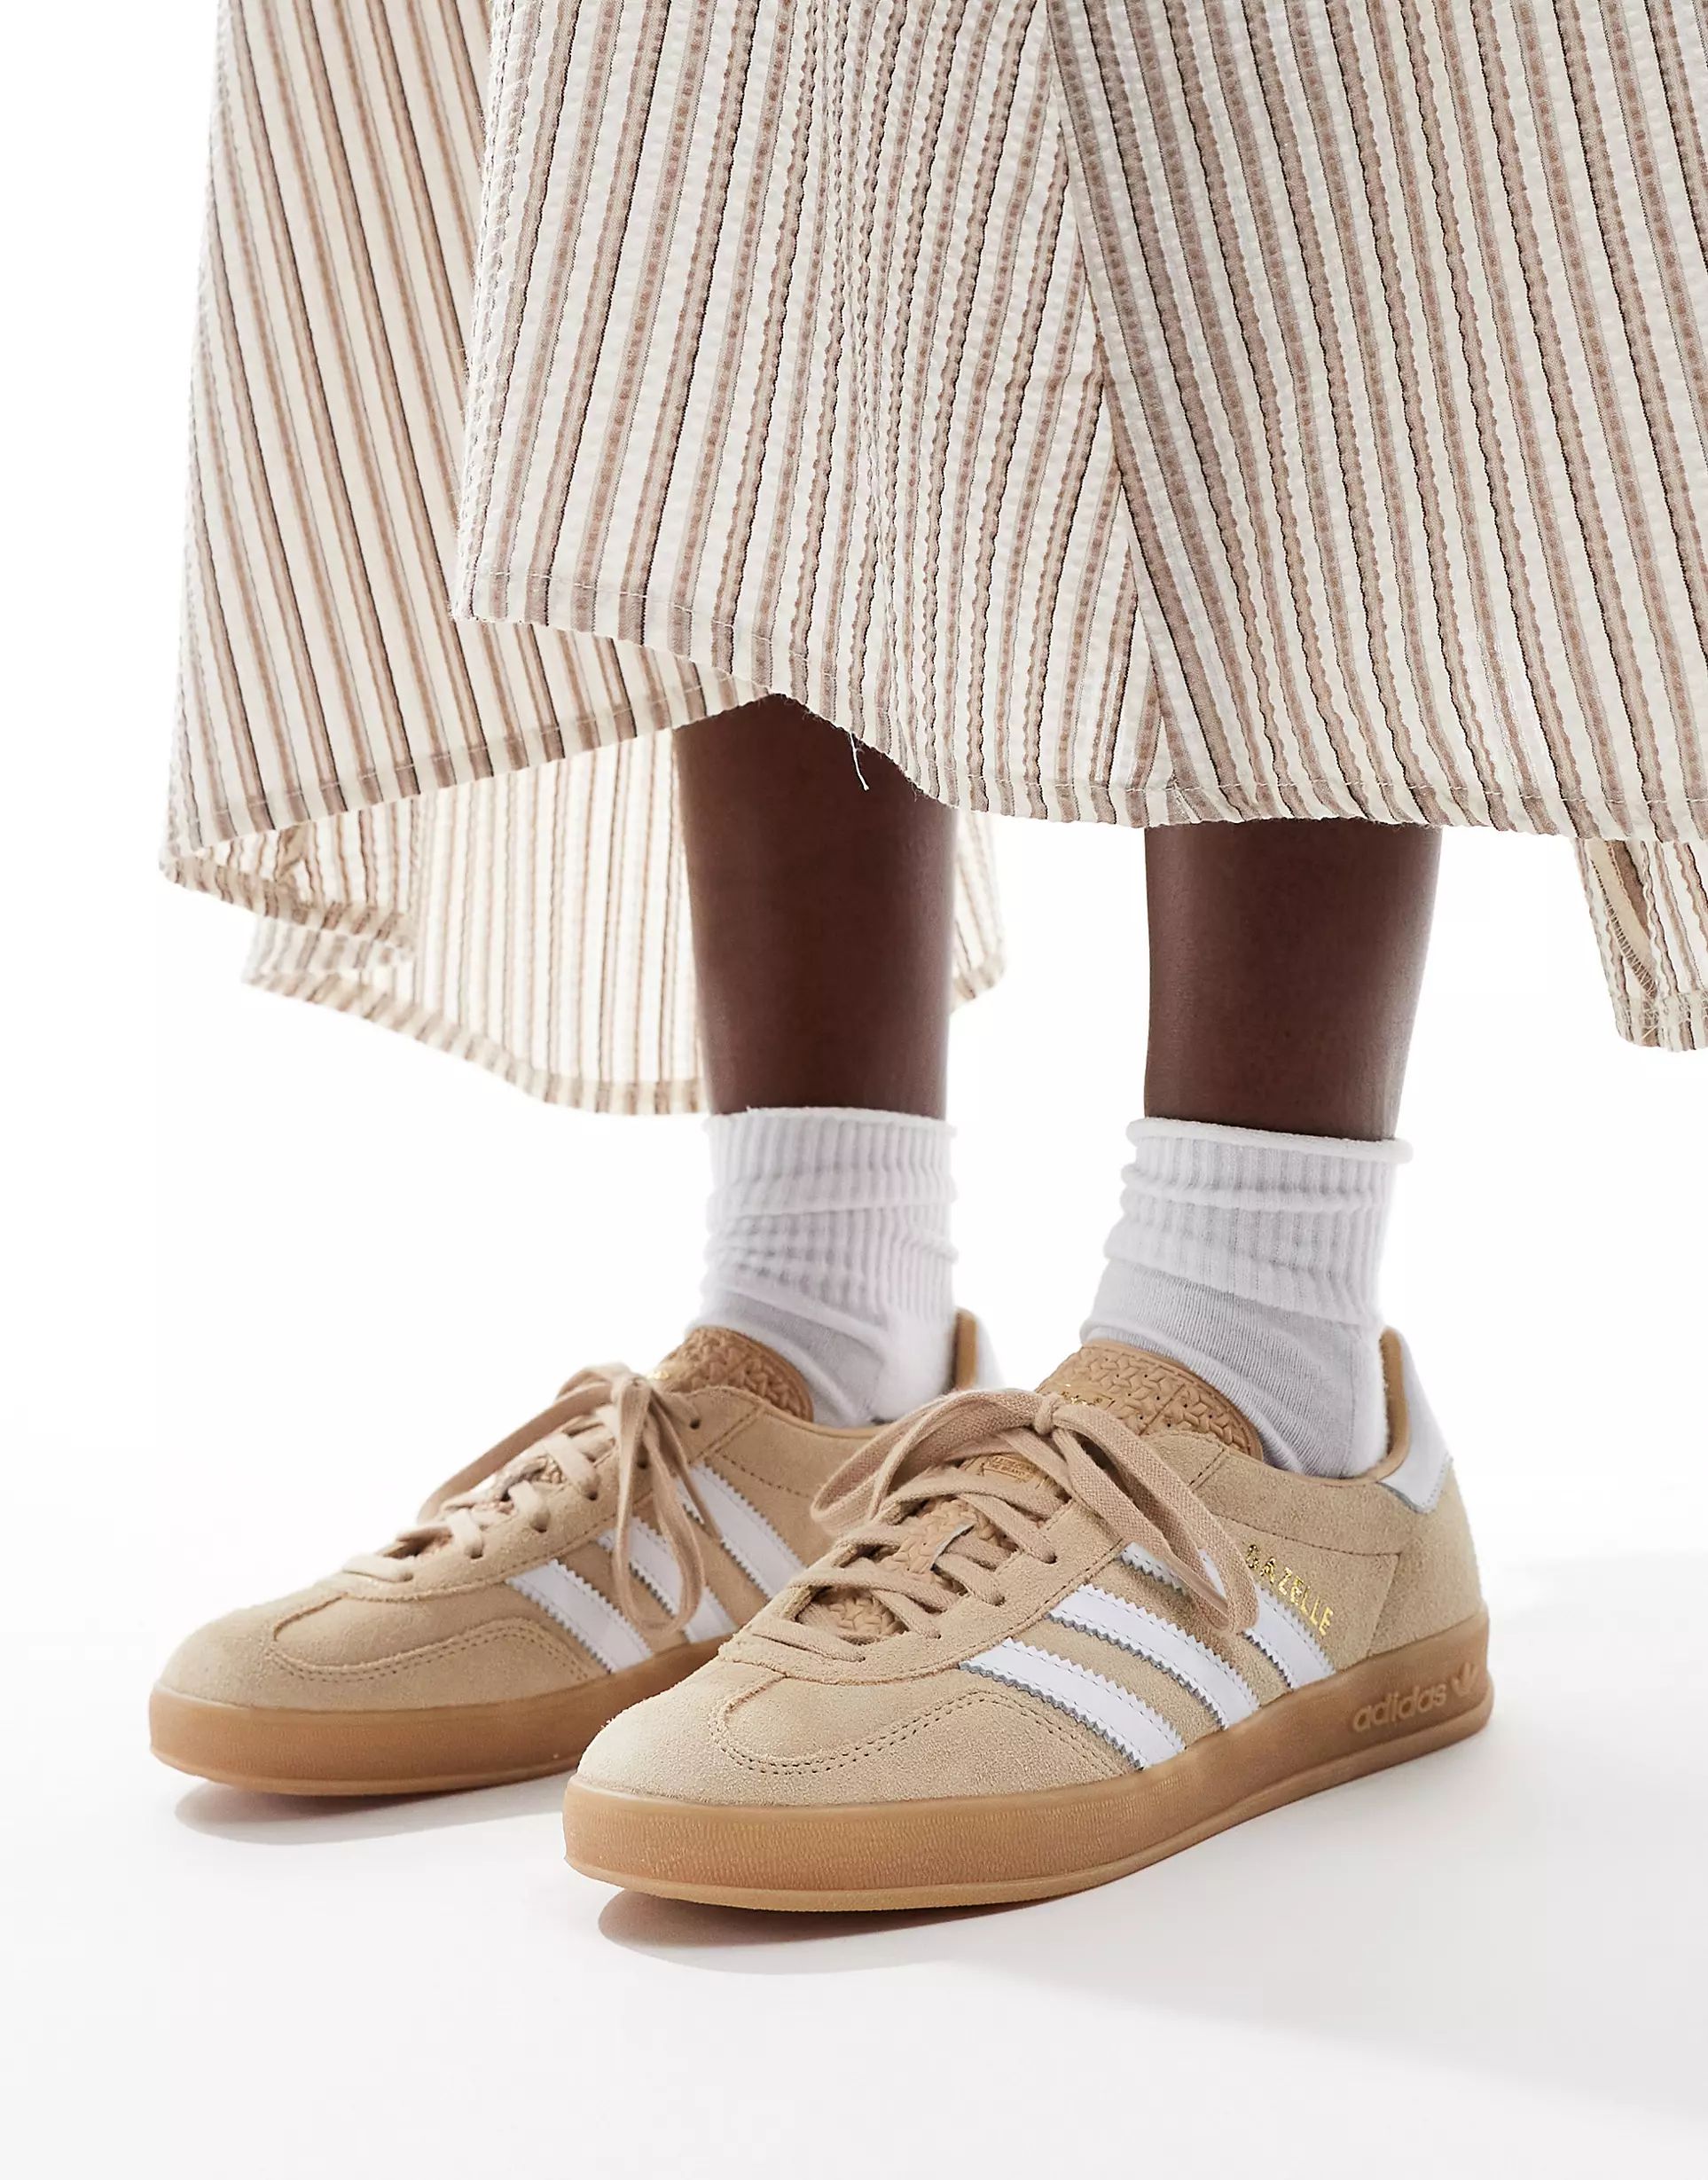 adidas Originals Gazelle Indoor sneakers in light brown and white | ASOS (Global)